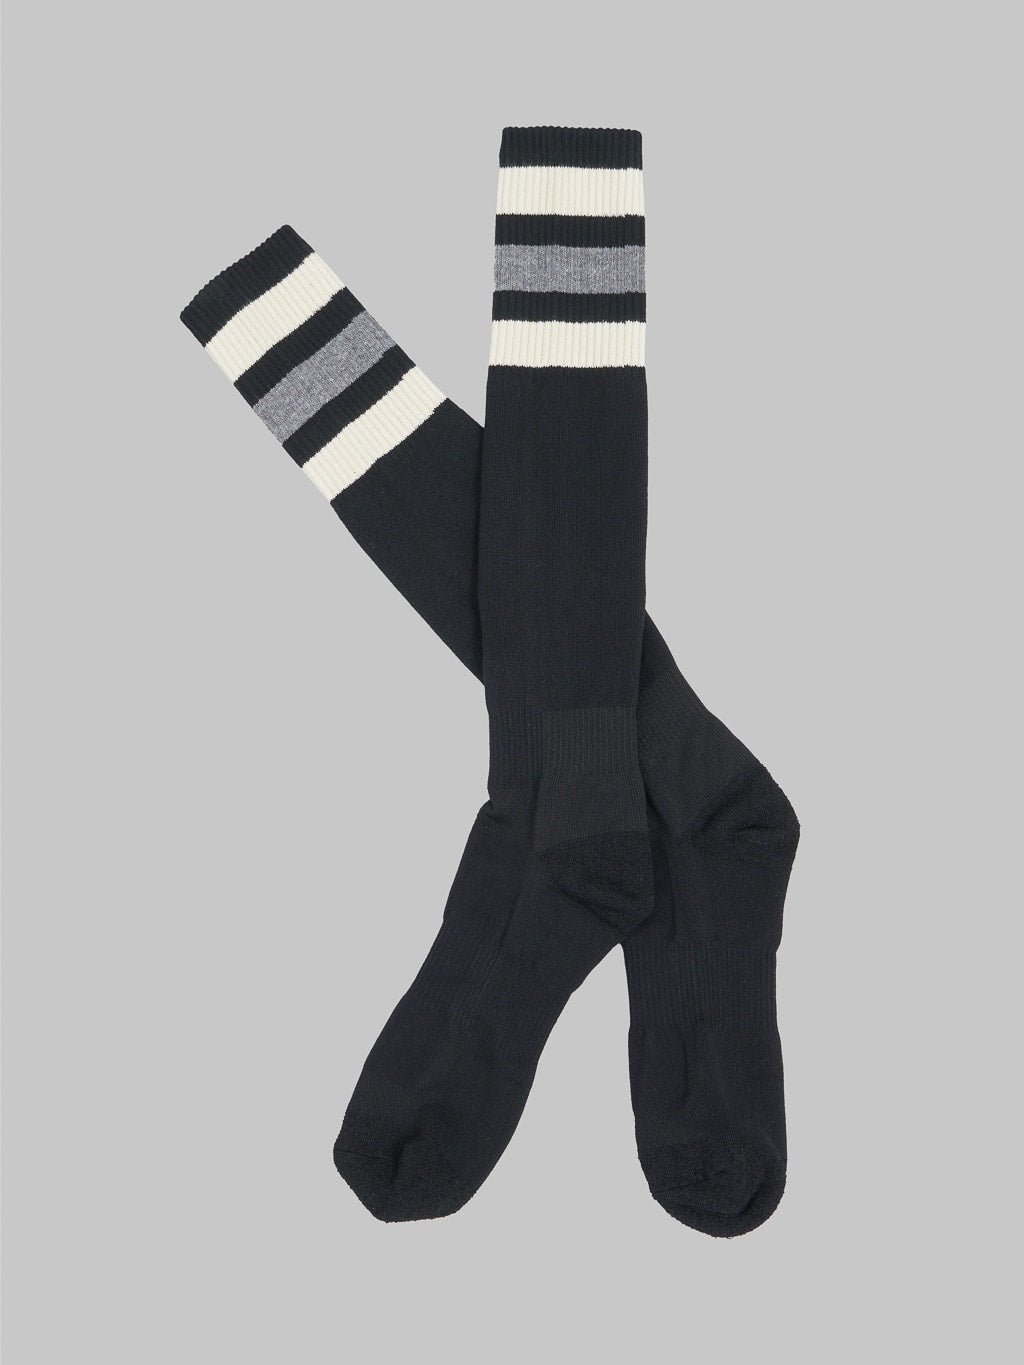 UES boot socks black made in japan